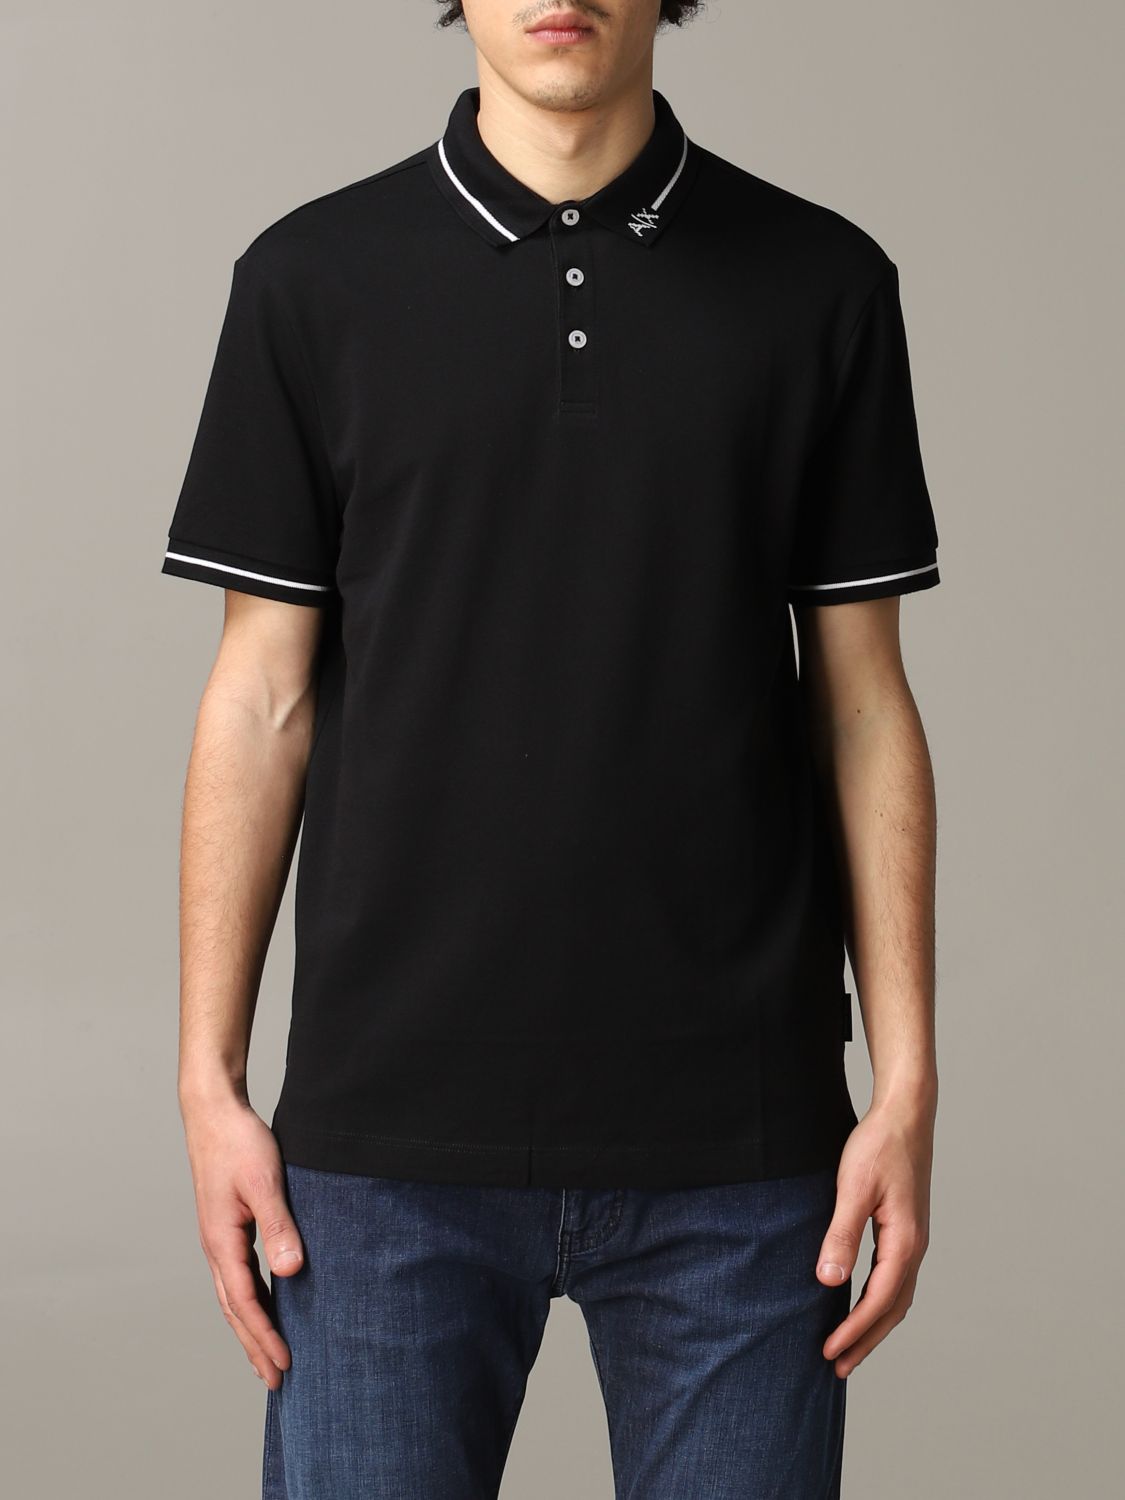 Armani Exchange polo shirt with short 